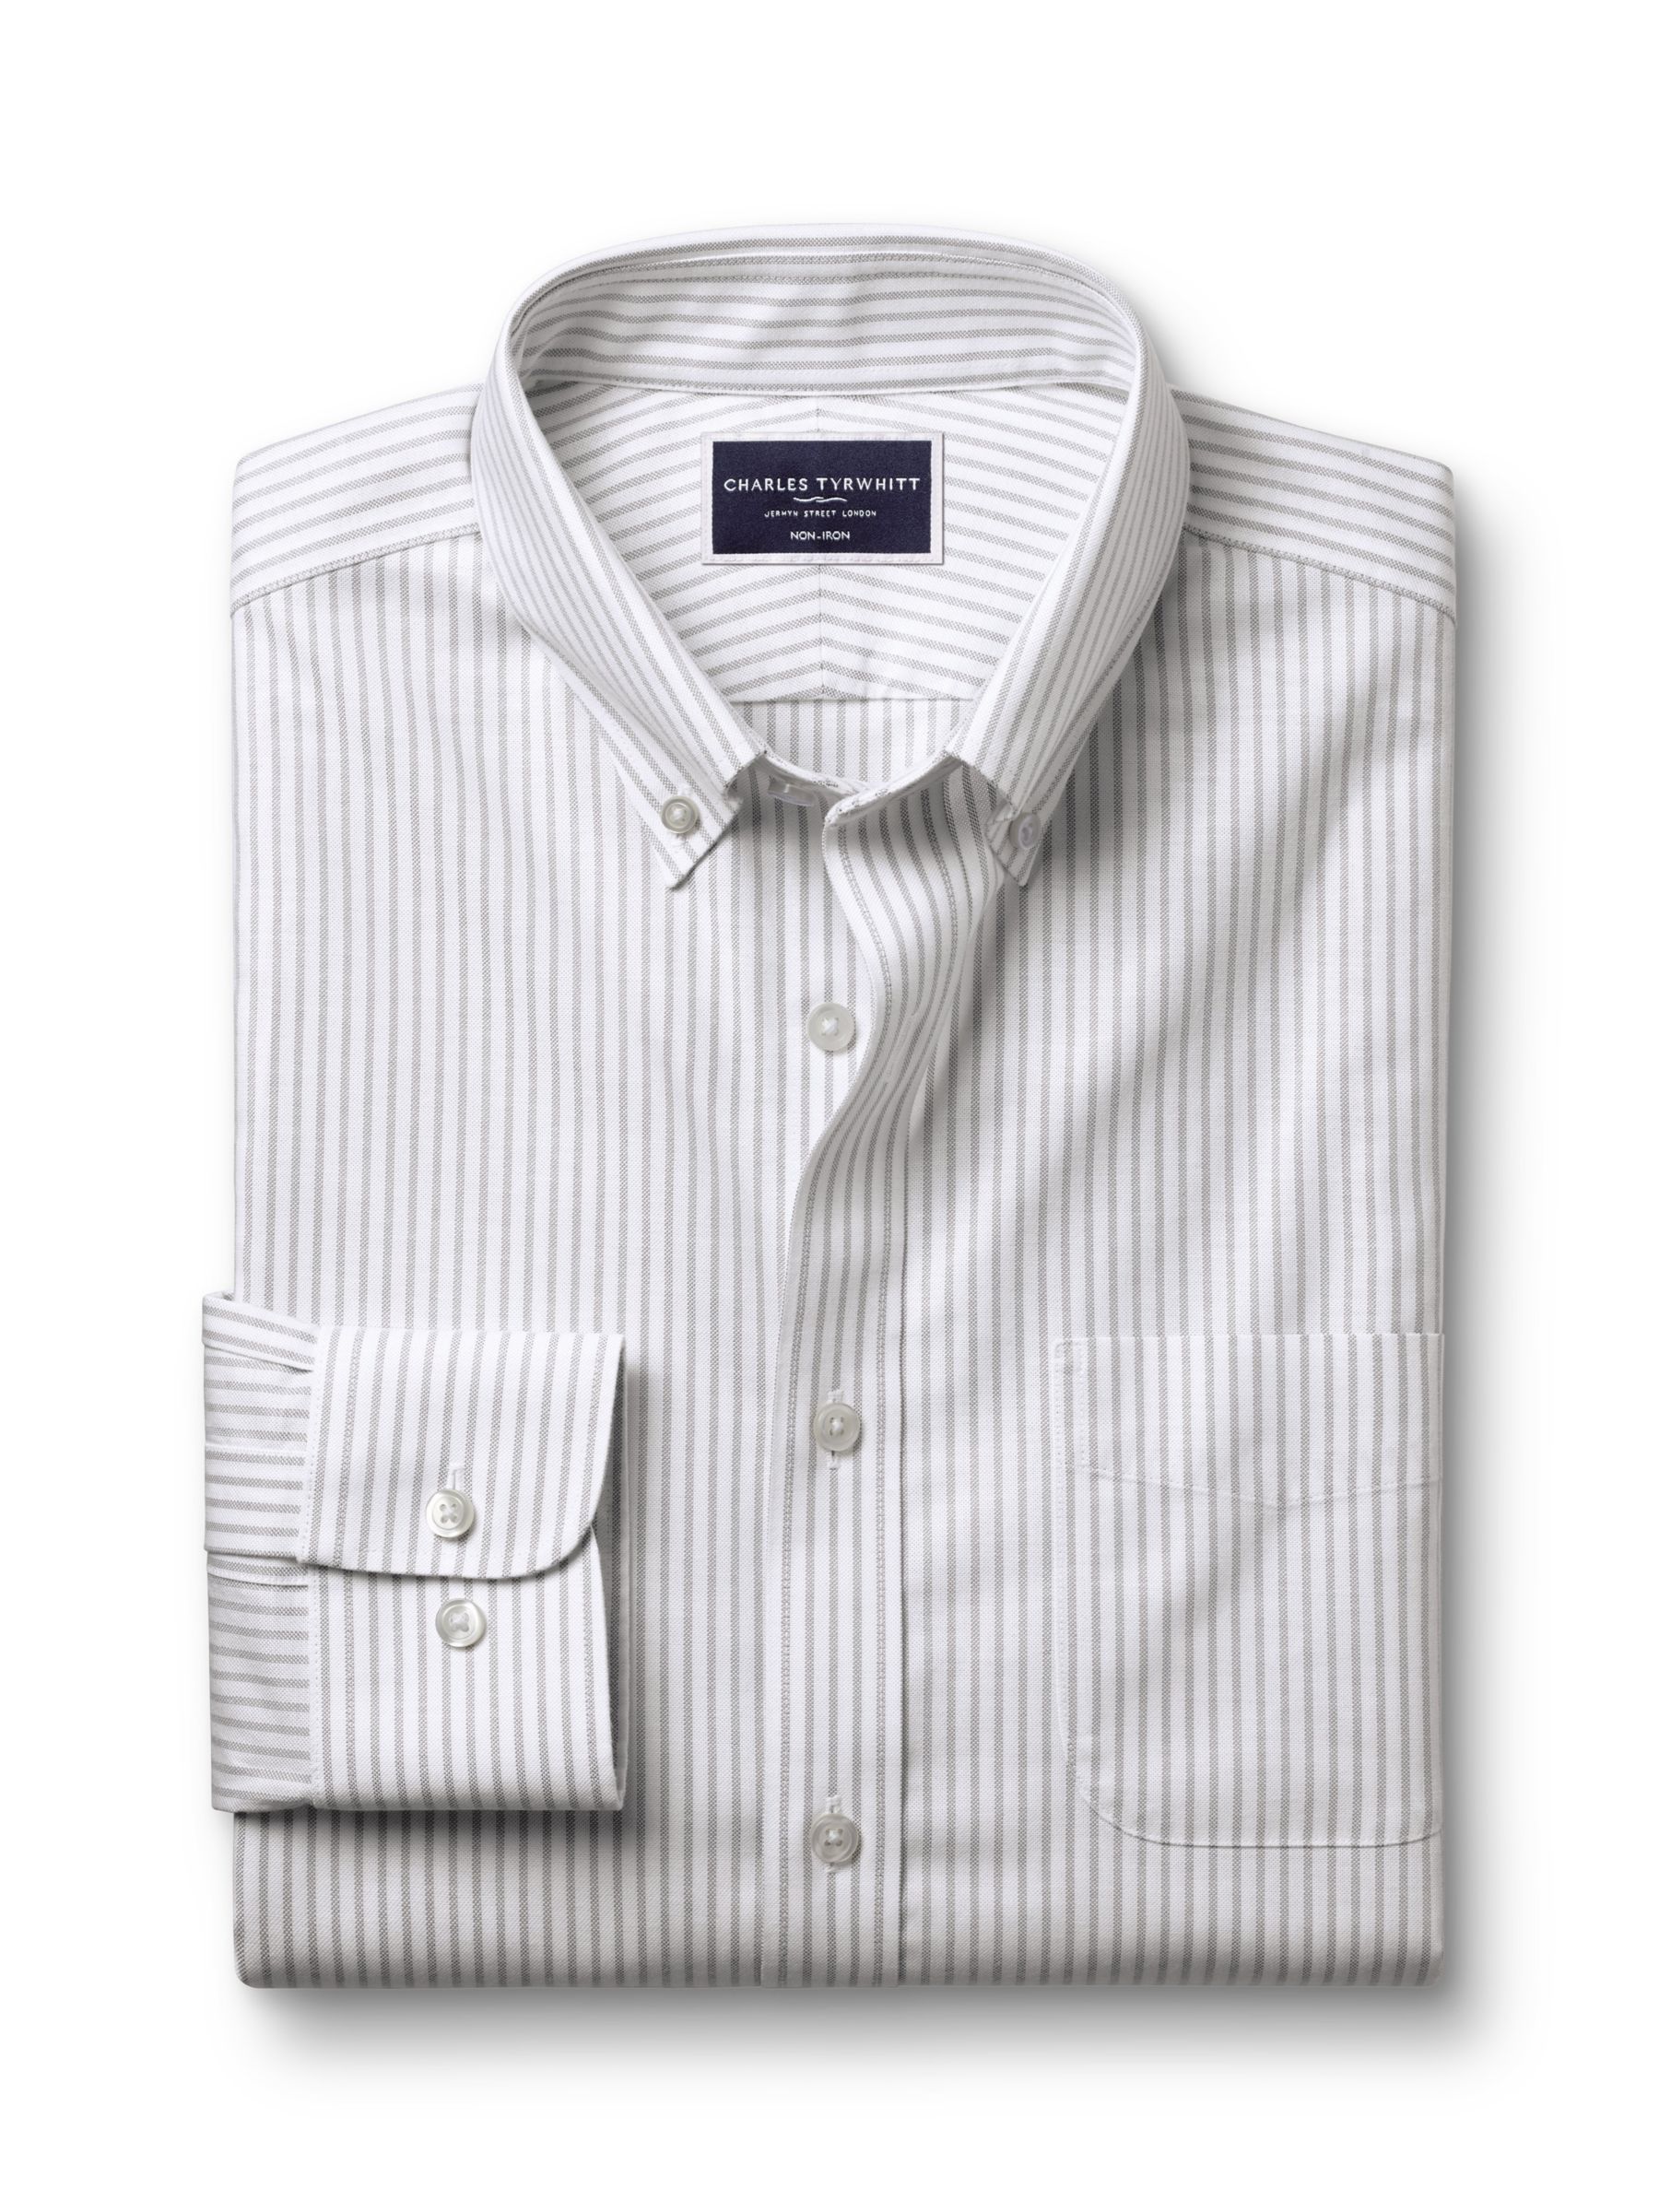 Charles Tyrwhitt Non-Iron Stretch Stripe Oxford Shirt, Silver Grey, L